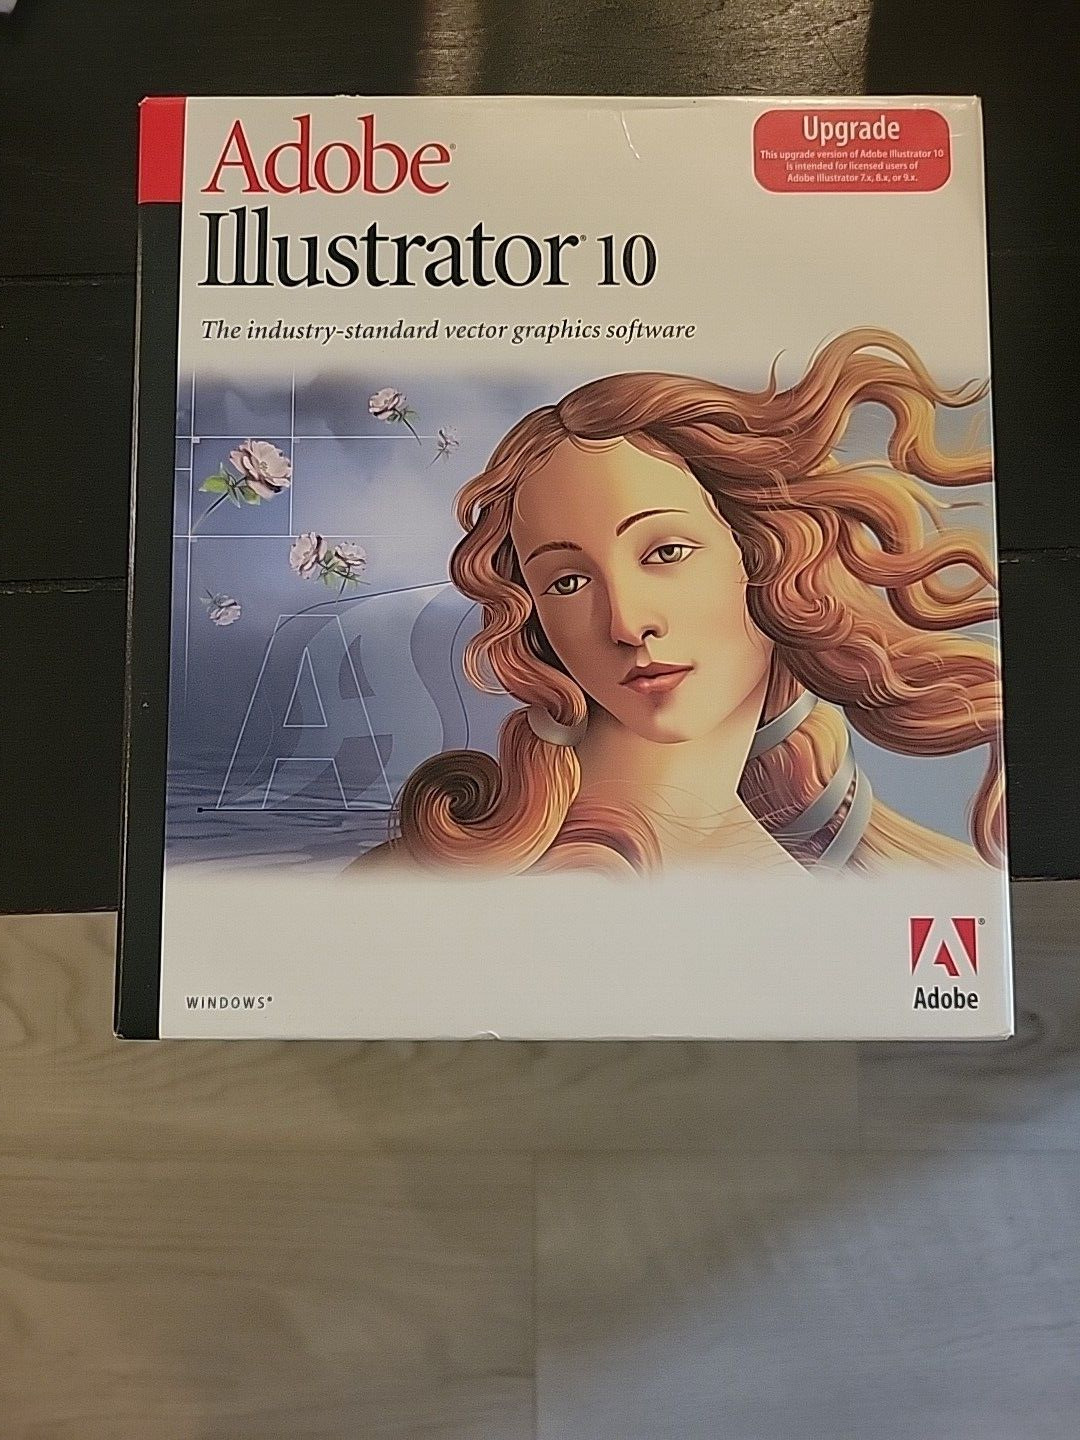 Adobe Illustrator 10 Windows Upgrade with Serial Number